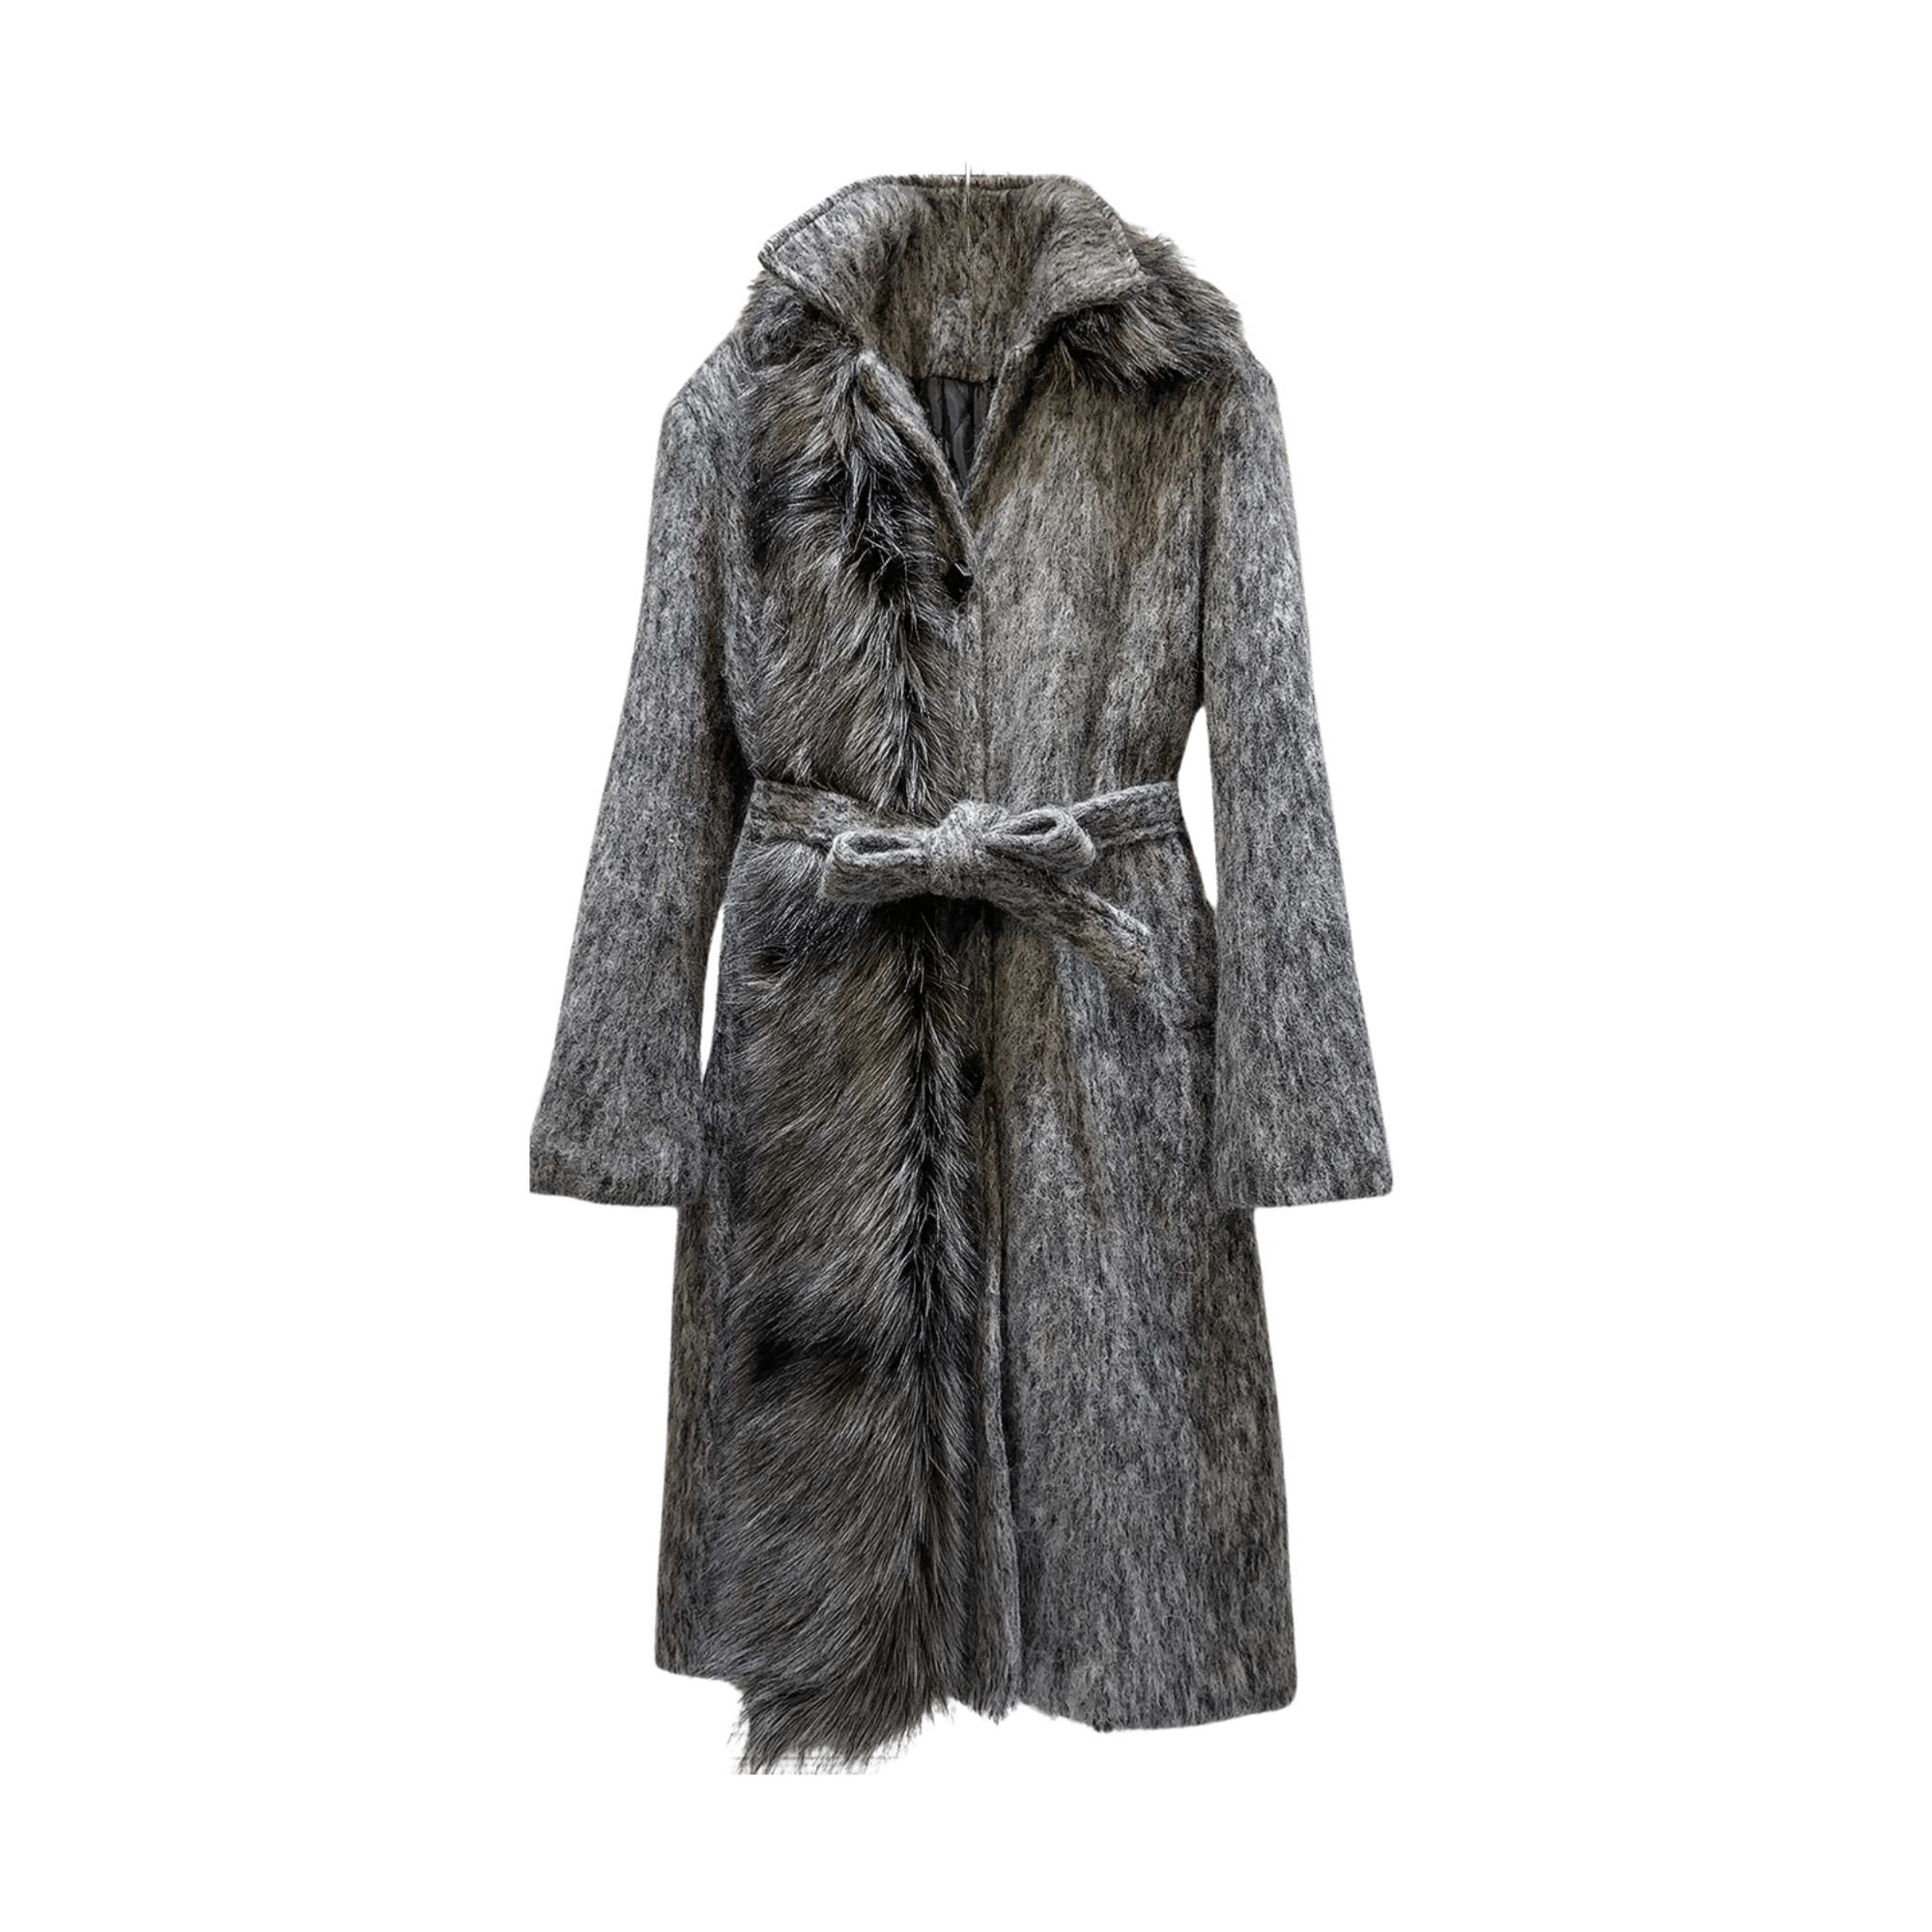 Posh Belted Winter Coat - Kelly Obi New York